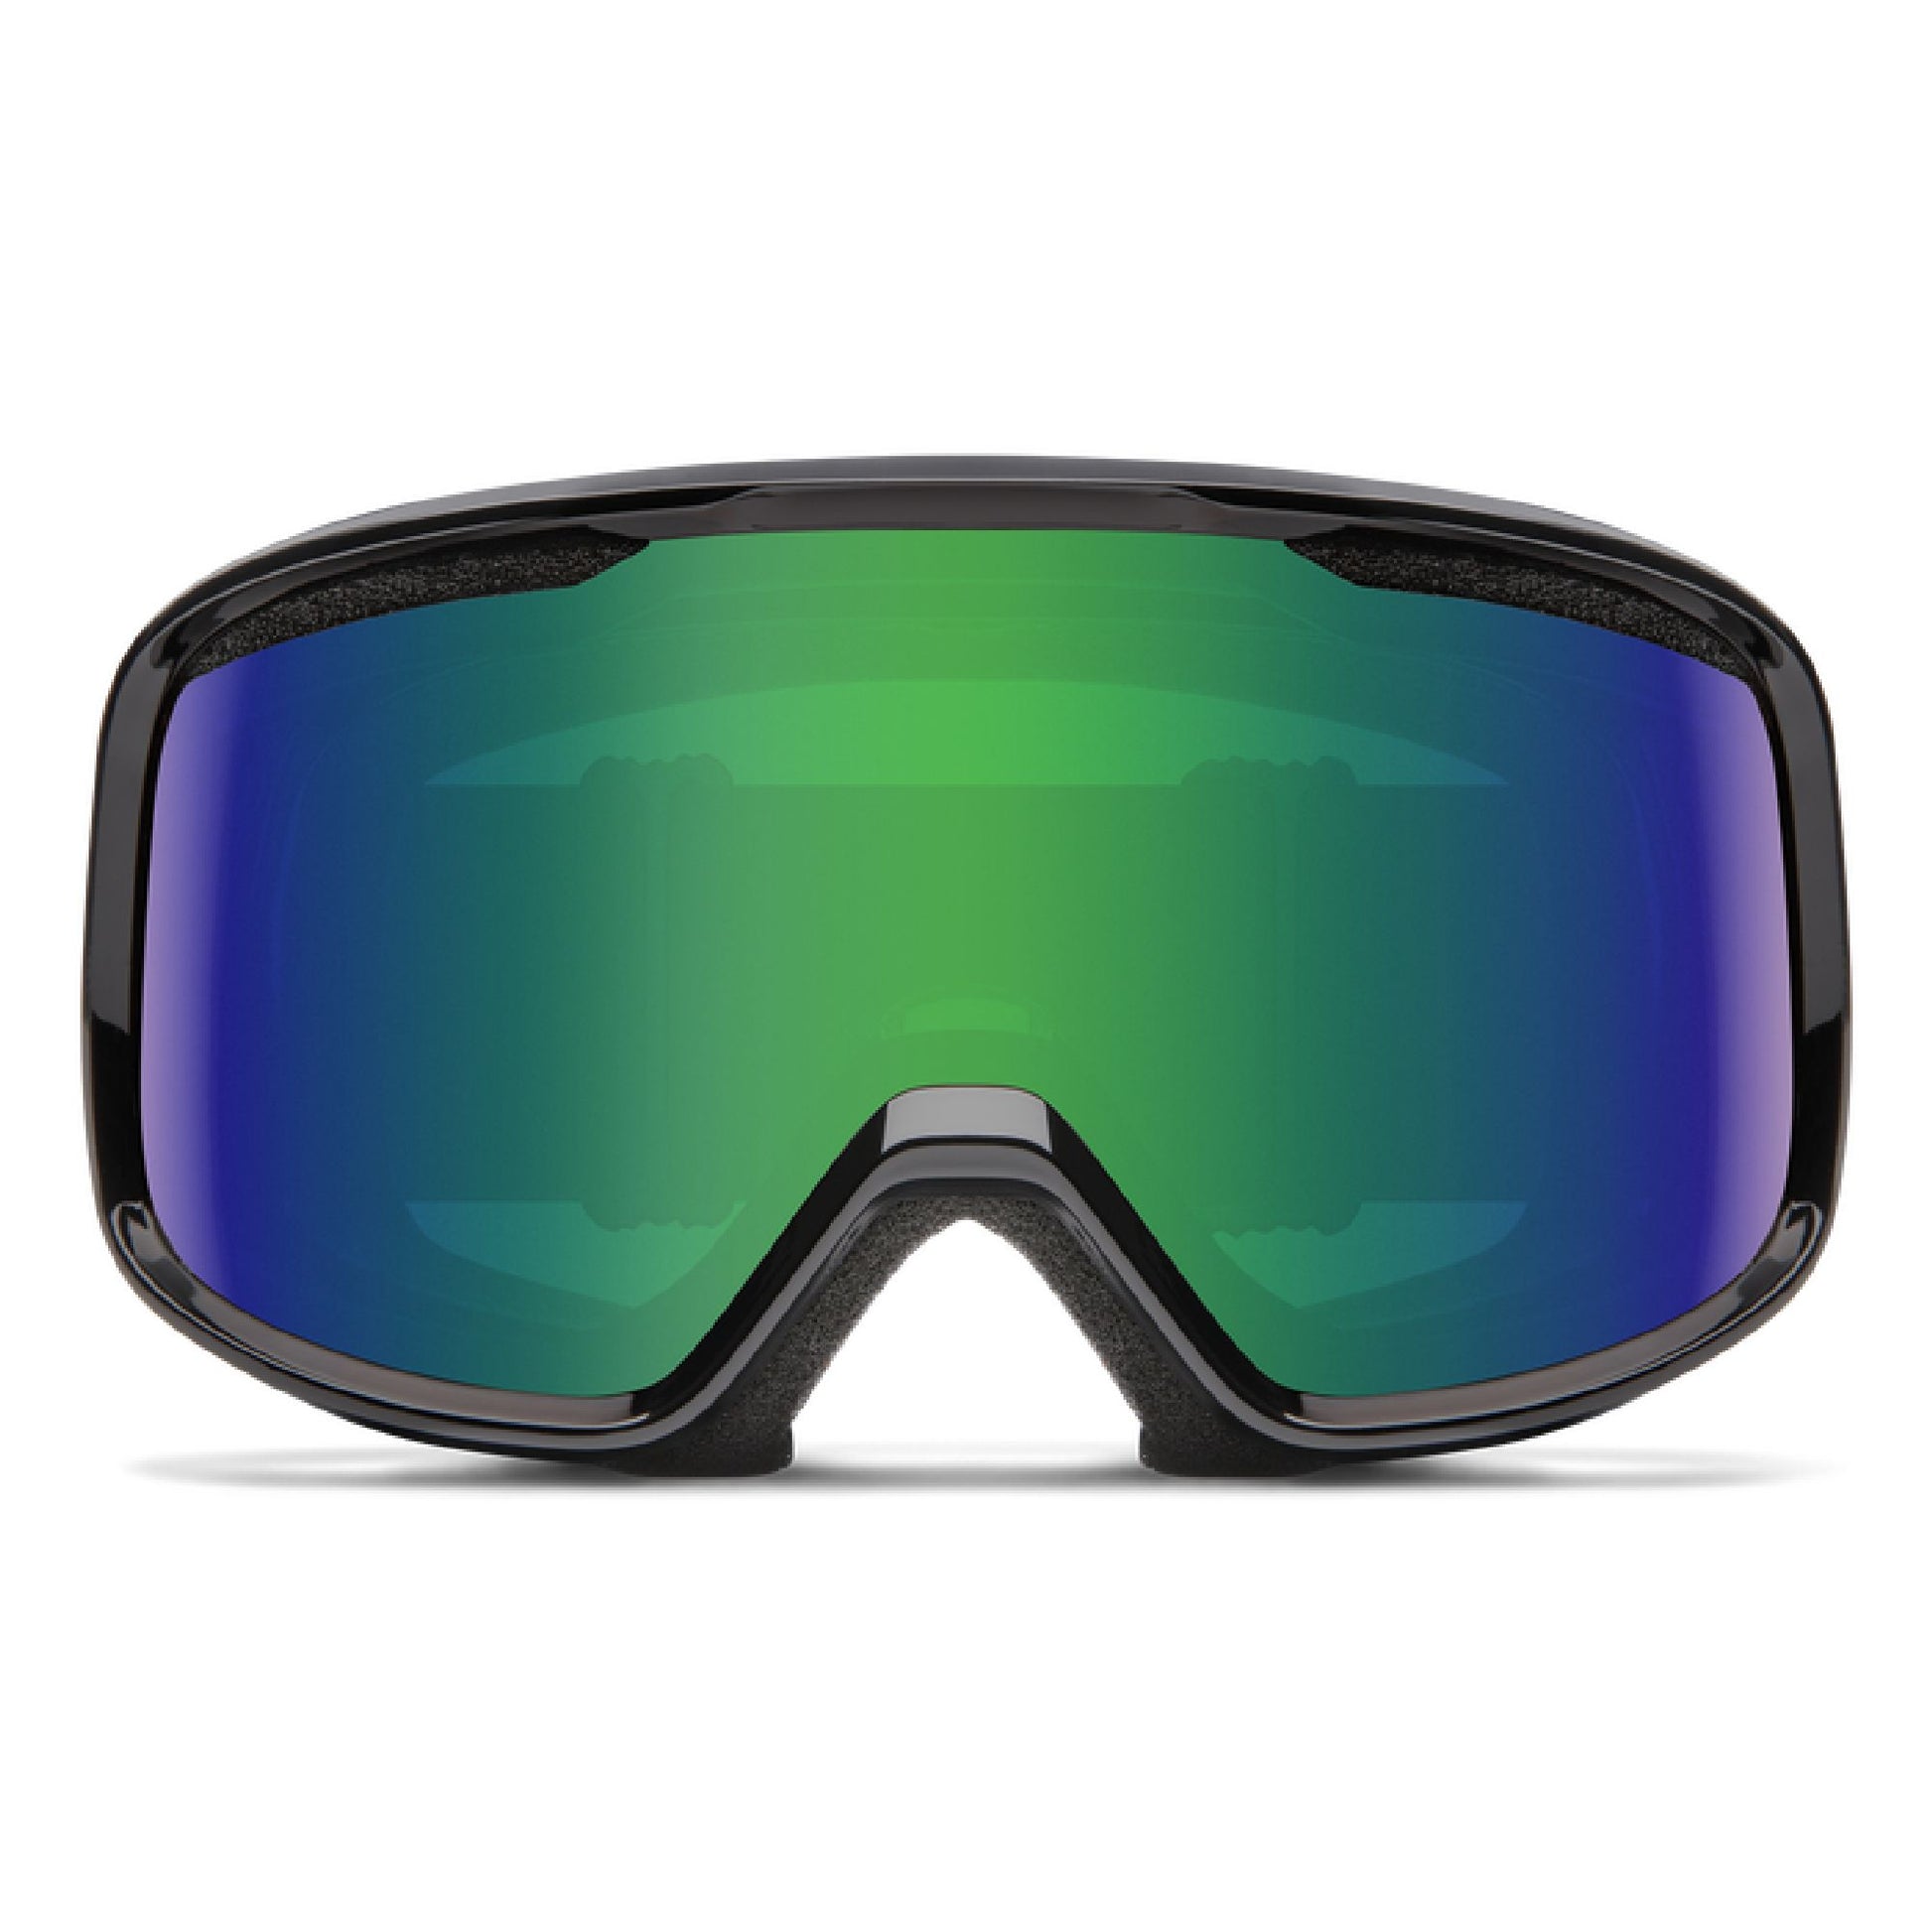 Smith Frontier Snow Goggle Black / Green Sol-X Mirror Snow Goggles